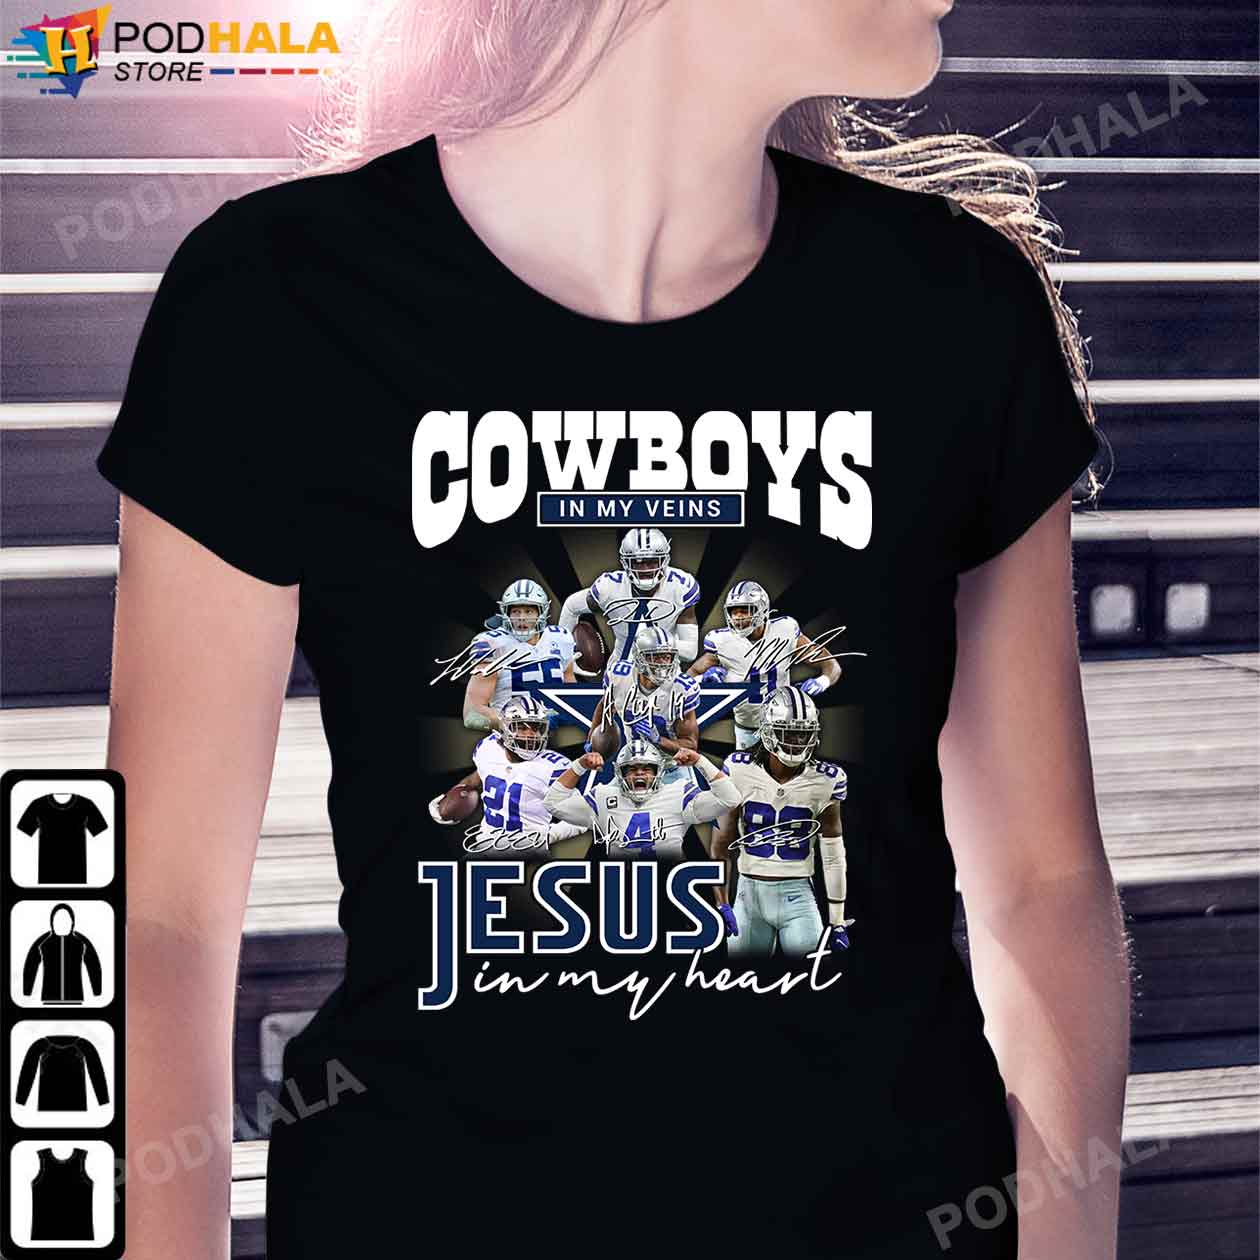 dallas cowboys t shirt